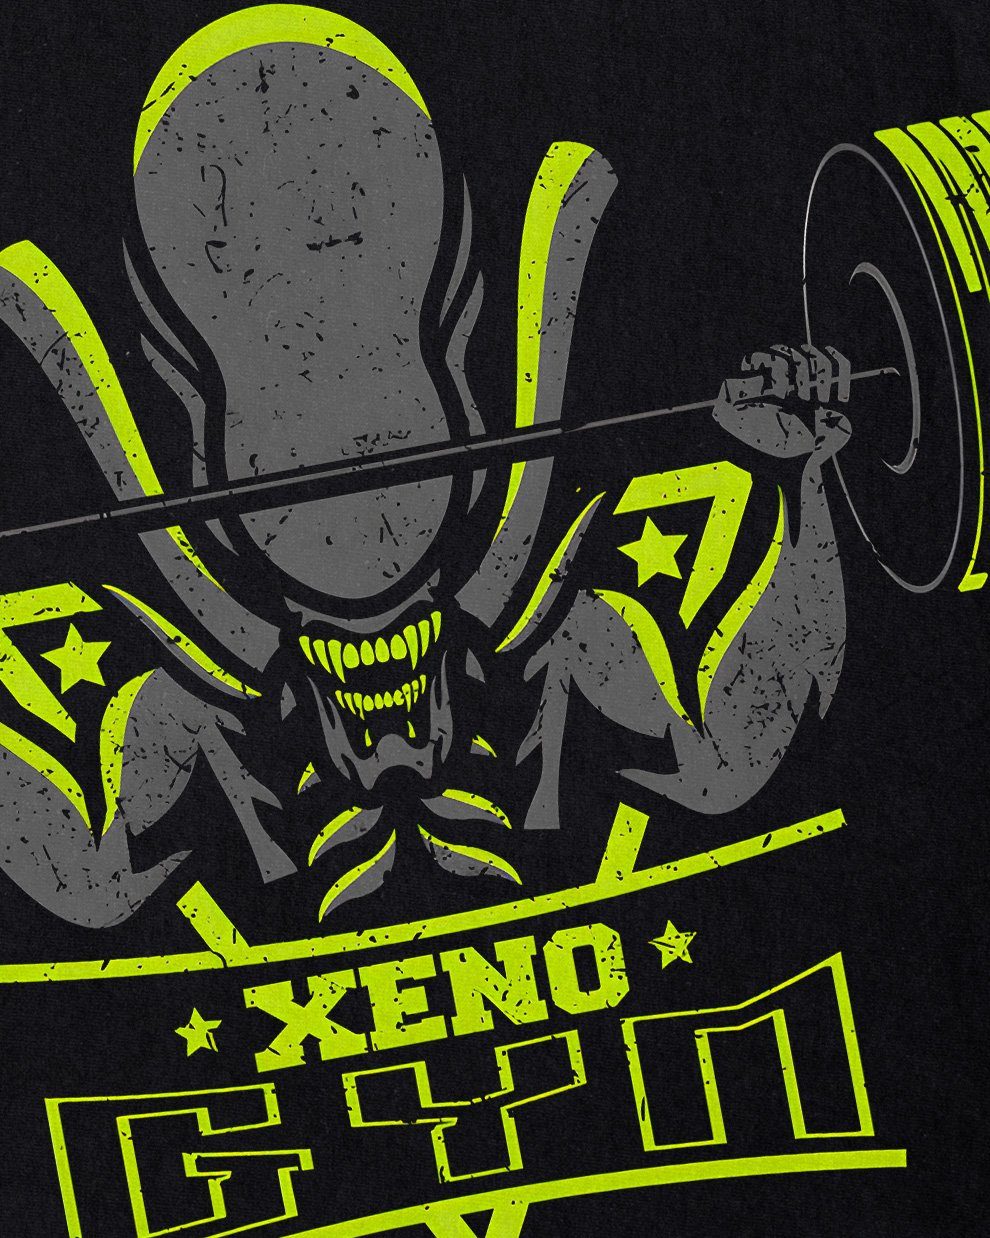 xenomorph studio Alien Kinder style3 sport alien fitness Gym T-Shirt Print-Shirt